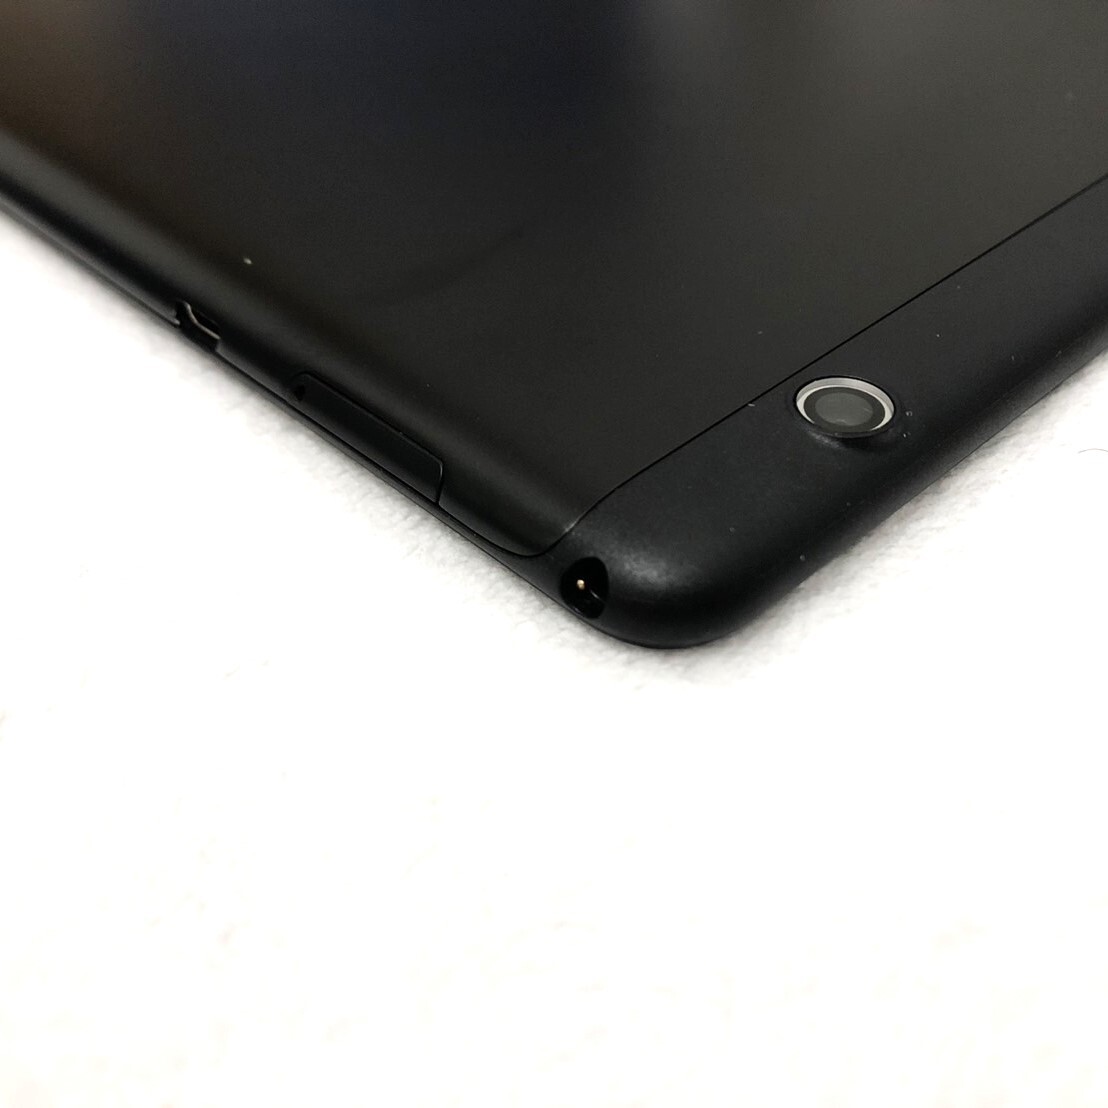 HUAWEI MediaPad T5 AGS2-W09[16GB] android планшет б/у рабочее состояние подтверждено 